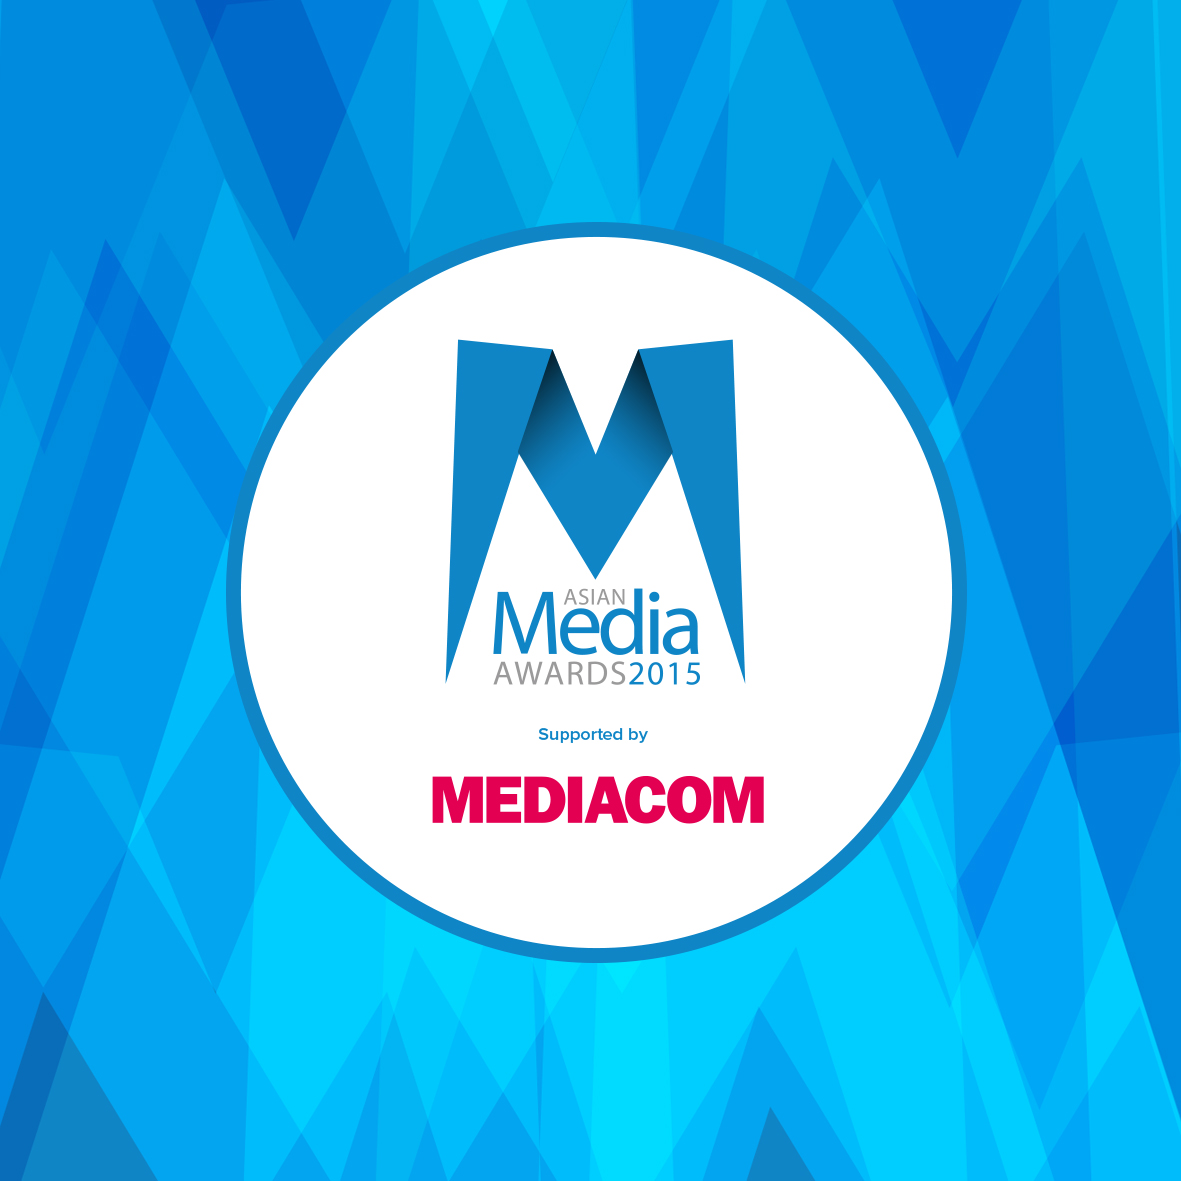 MediaCom Partner with Asian Media Awards 2015